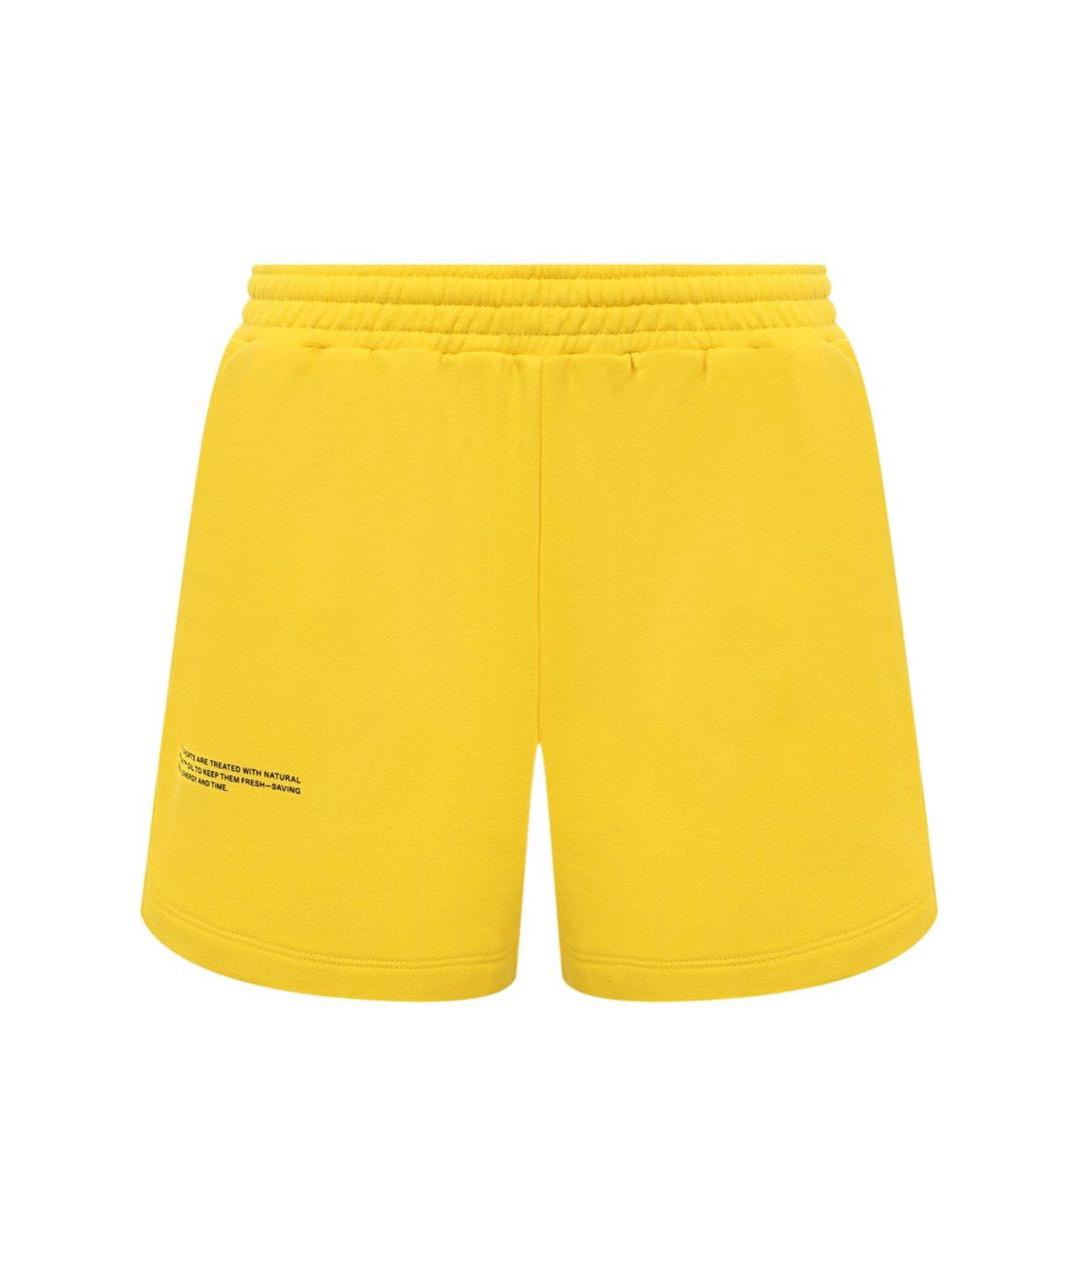 THE PANGAIA Желтые хлопковые шорты, фото 1